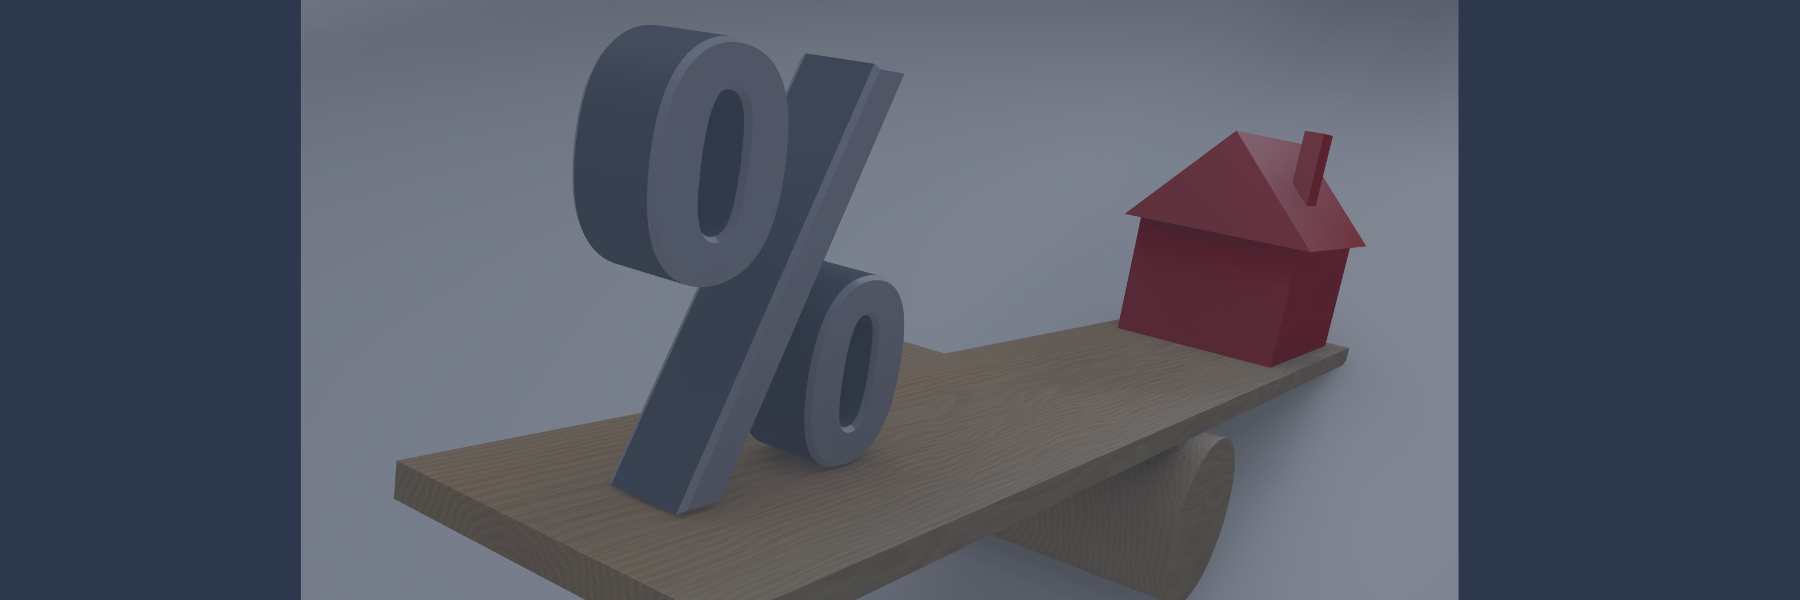 Image depicting balance of real estate market.